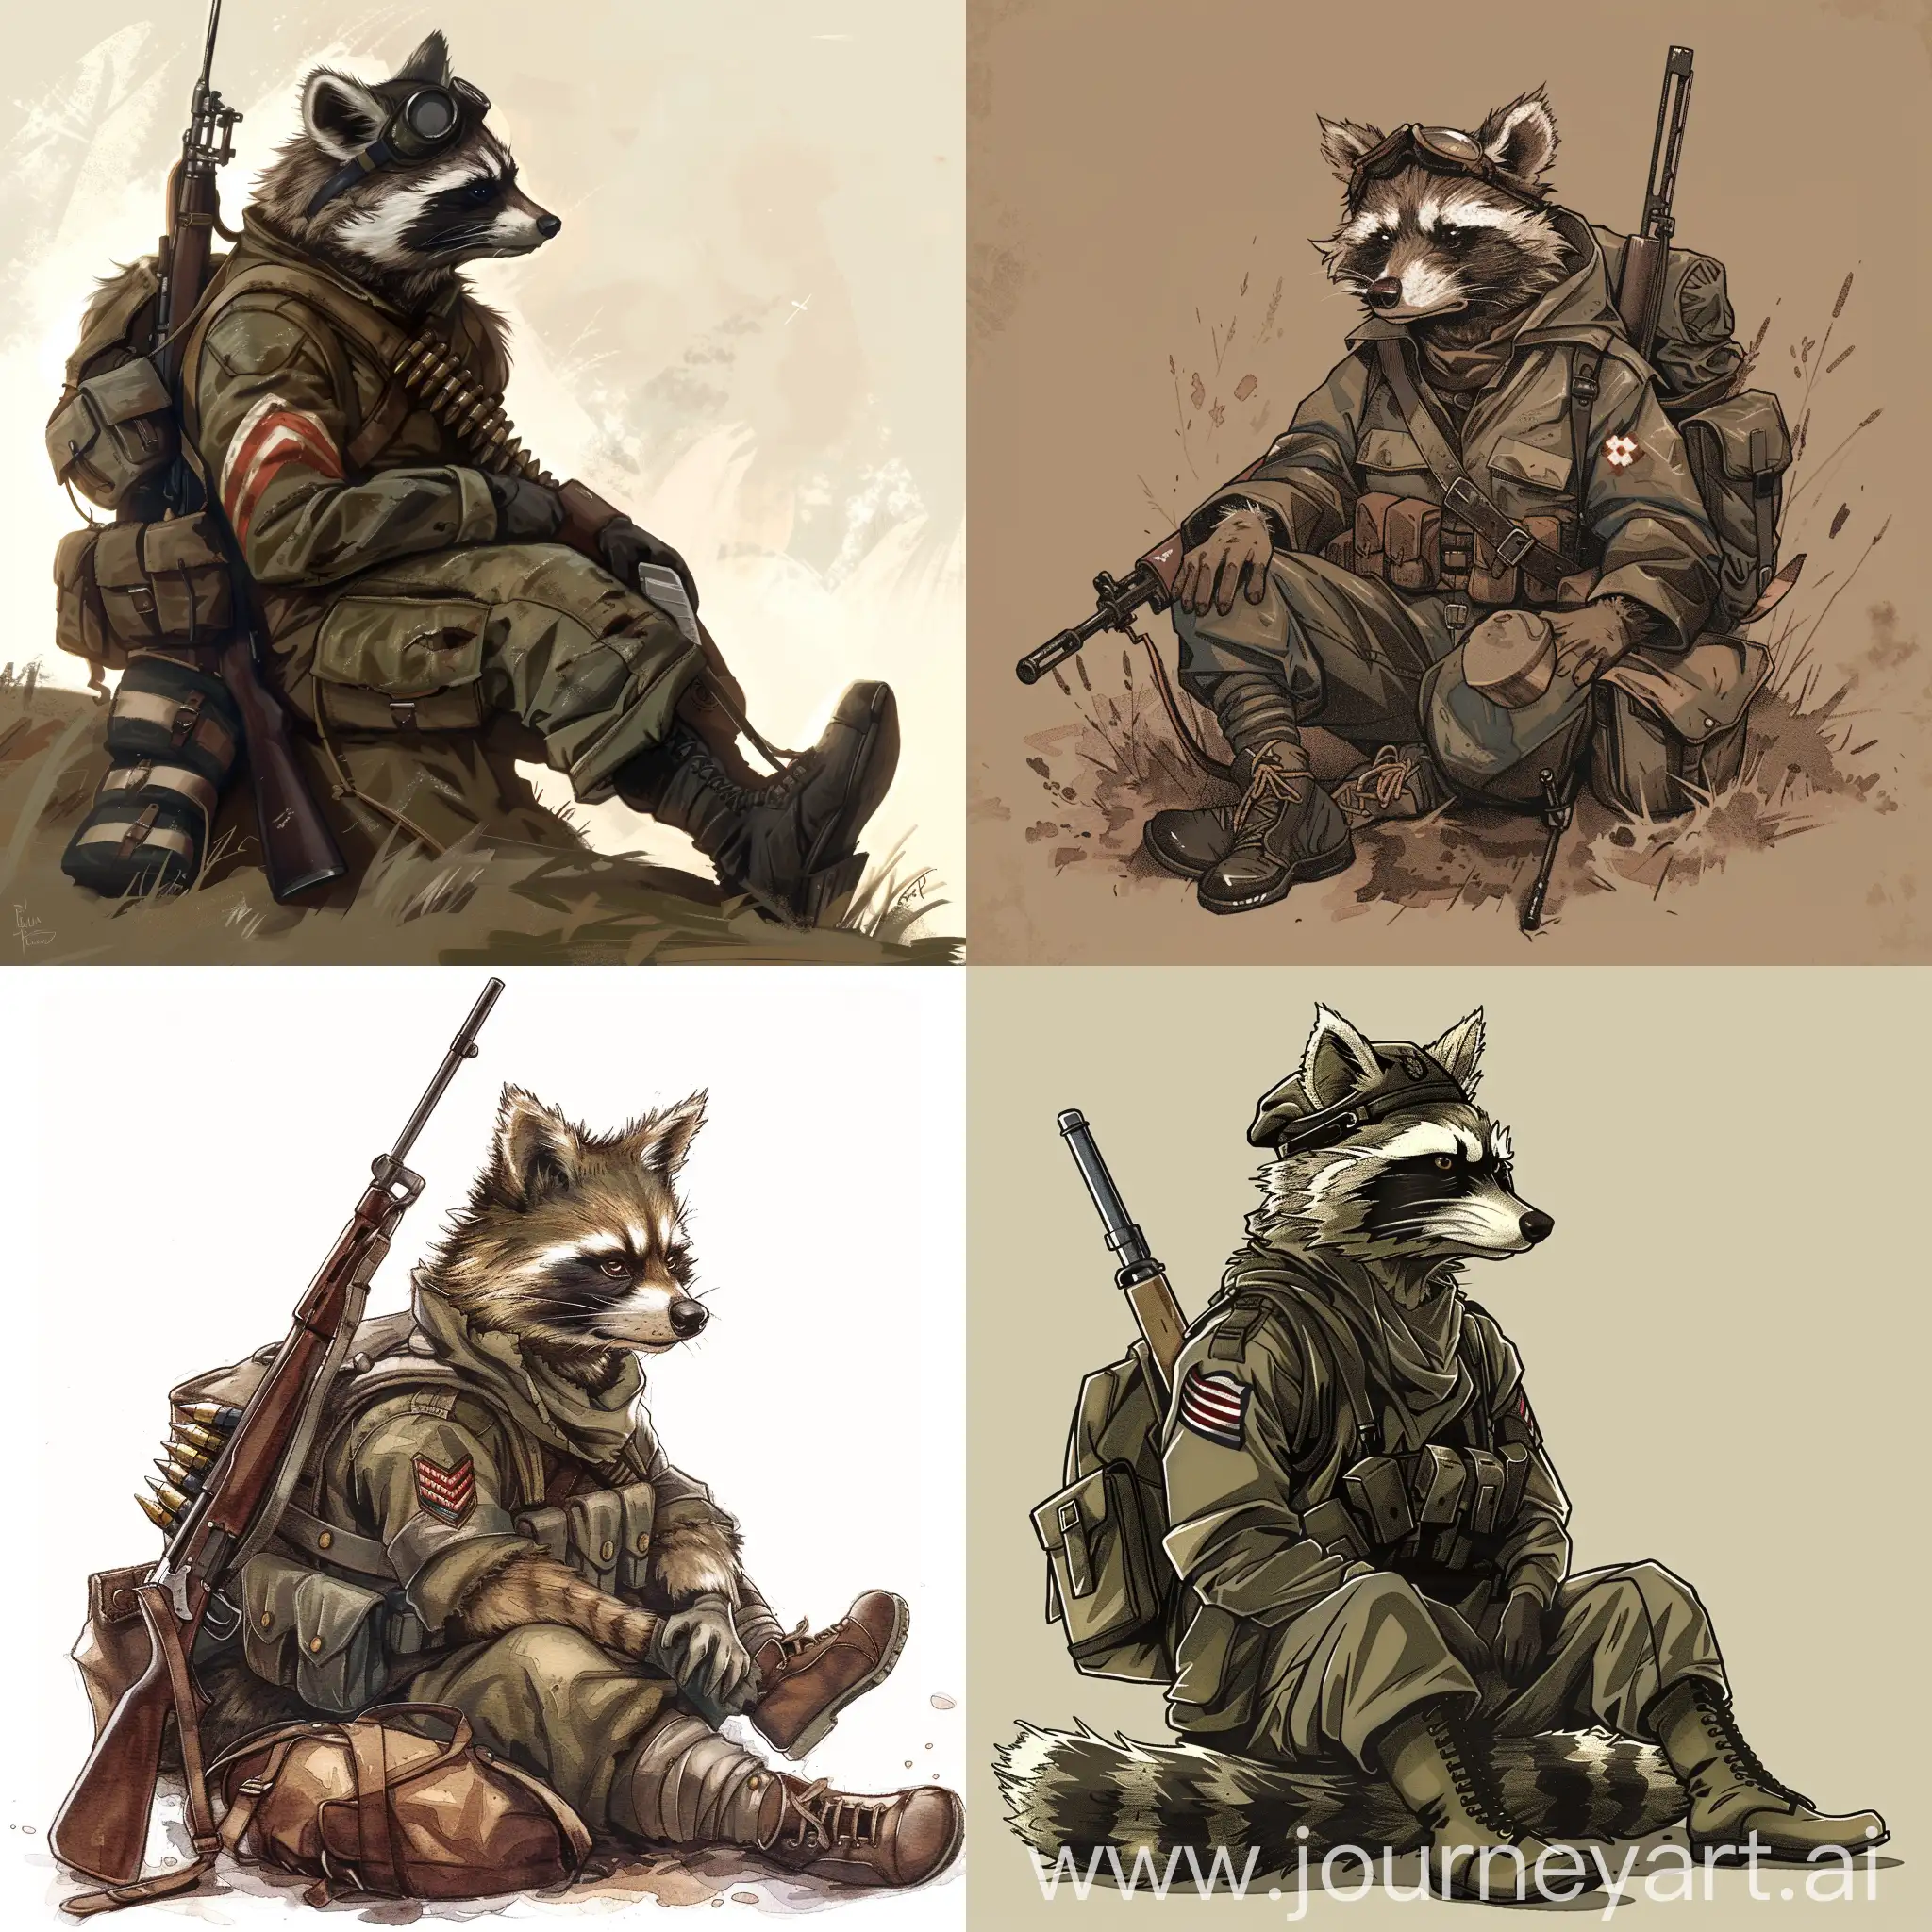 Raccoon-Warrior-Soldier-in-World-War-2-Setting